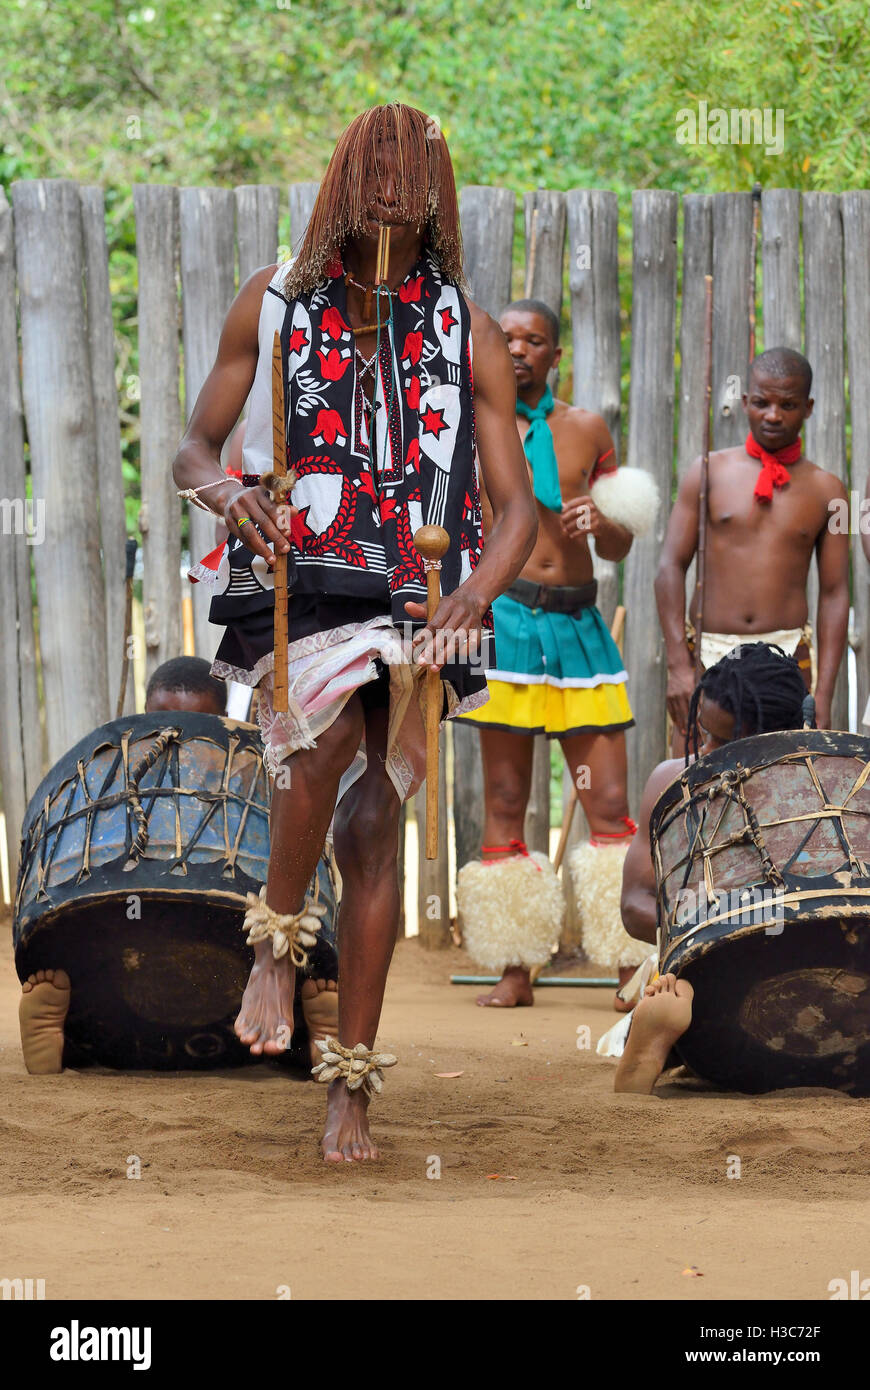 Canto y baile de la tropa tradicional swazi en la aldea cultural de Mantenga Swazi (Ligugu Lemaswati) Valle Ezulwini, Eswatini (anteriormente Swazilandia) Foto de stock